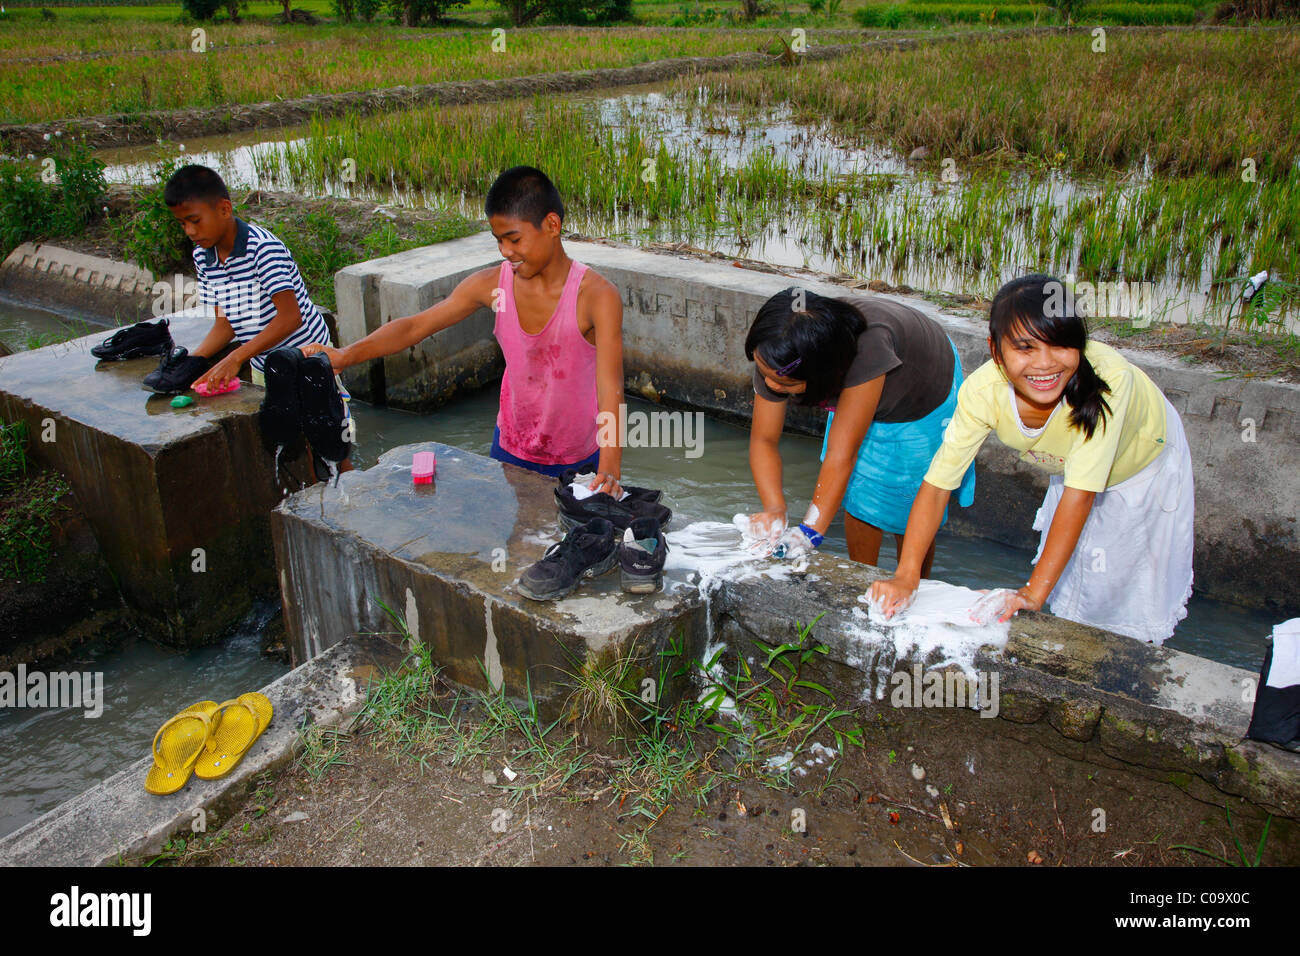 Children cleaning shoes and washing socks, Margaritha children's home, Marihat, Batak region, Sumatra island, Indonesia, Asia Stock Photo